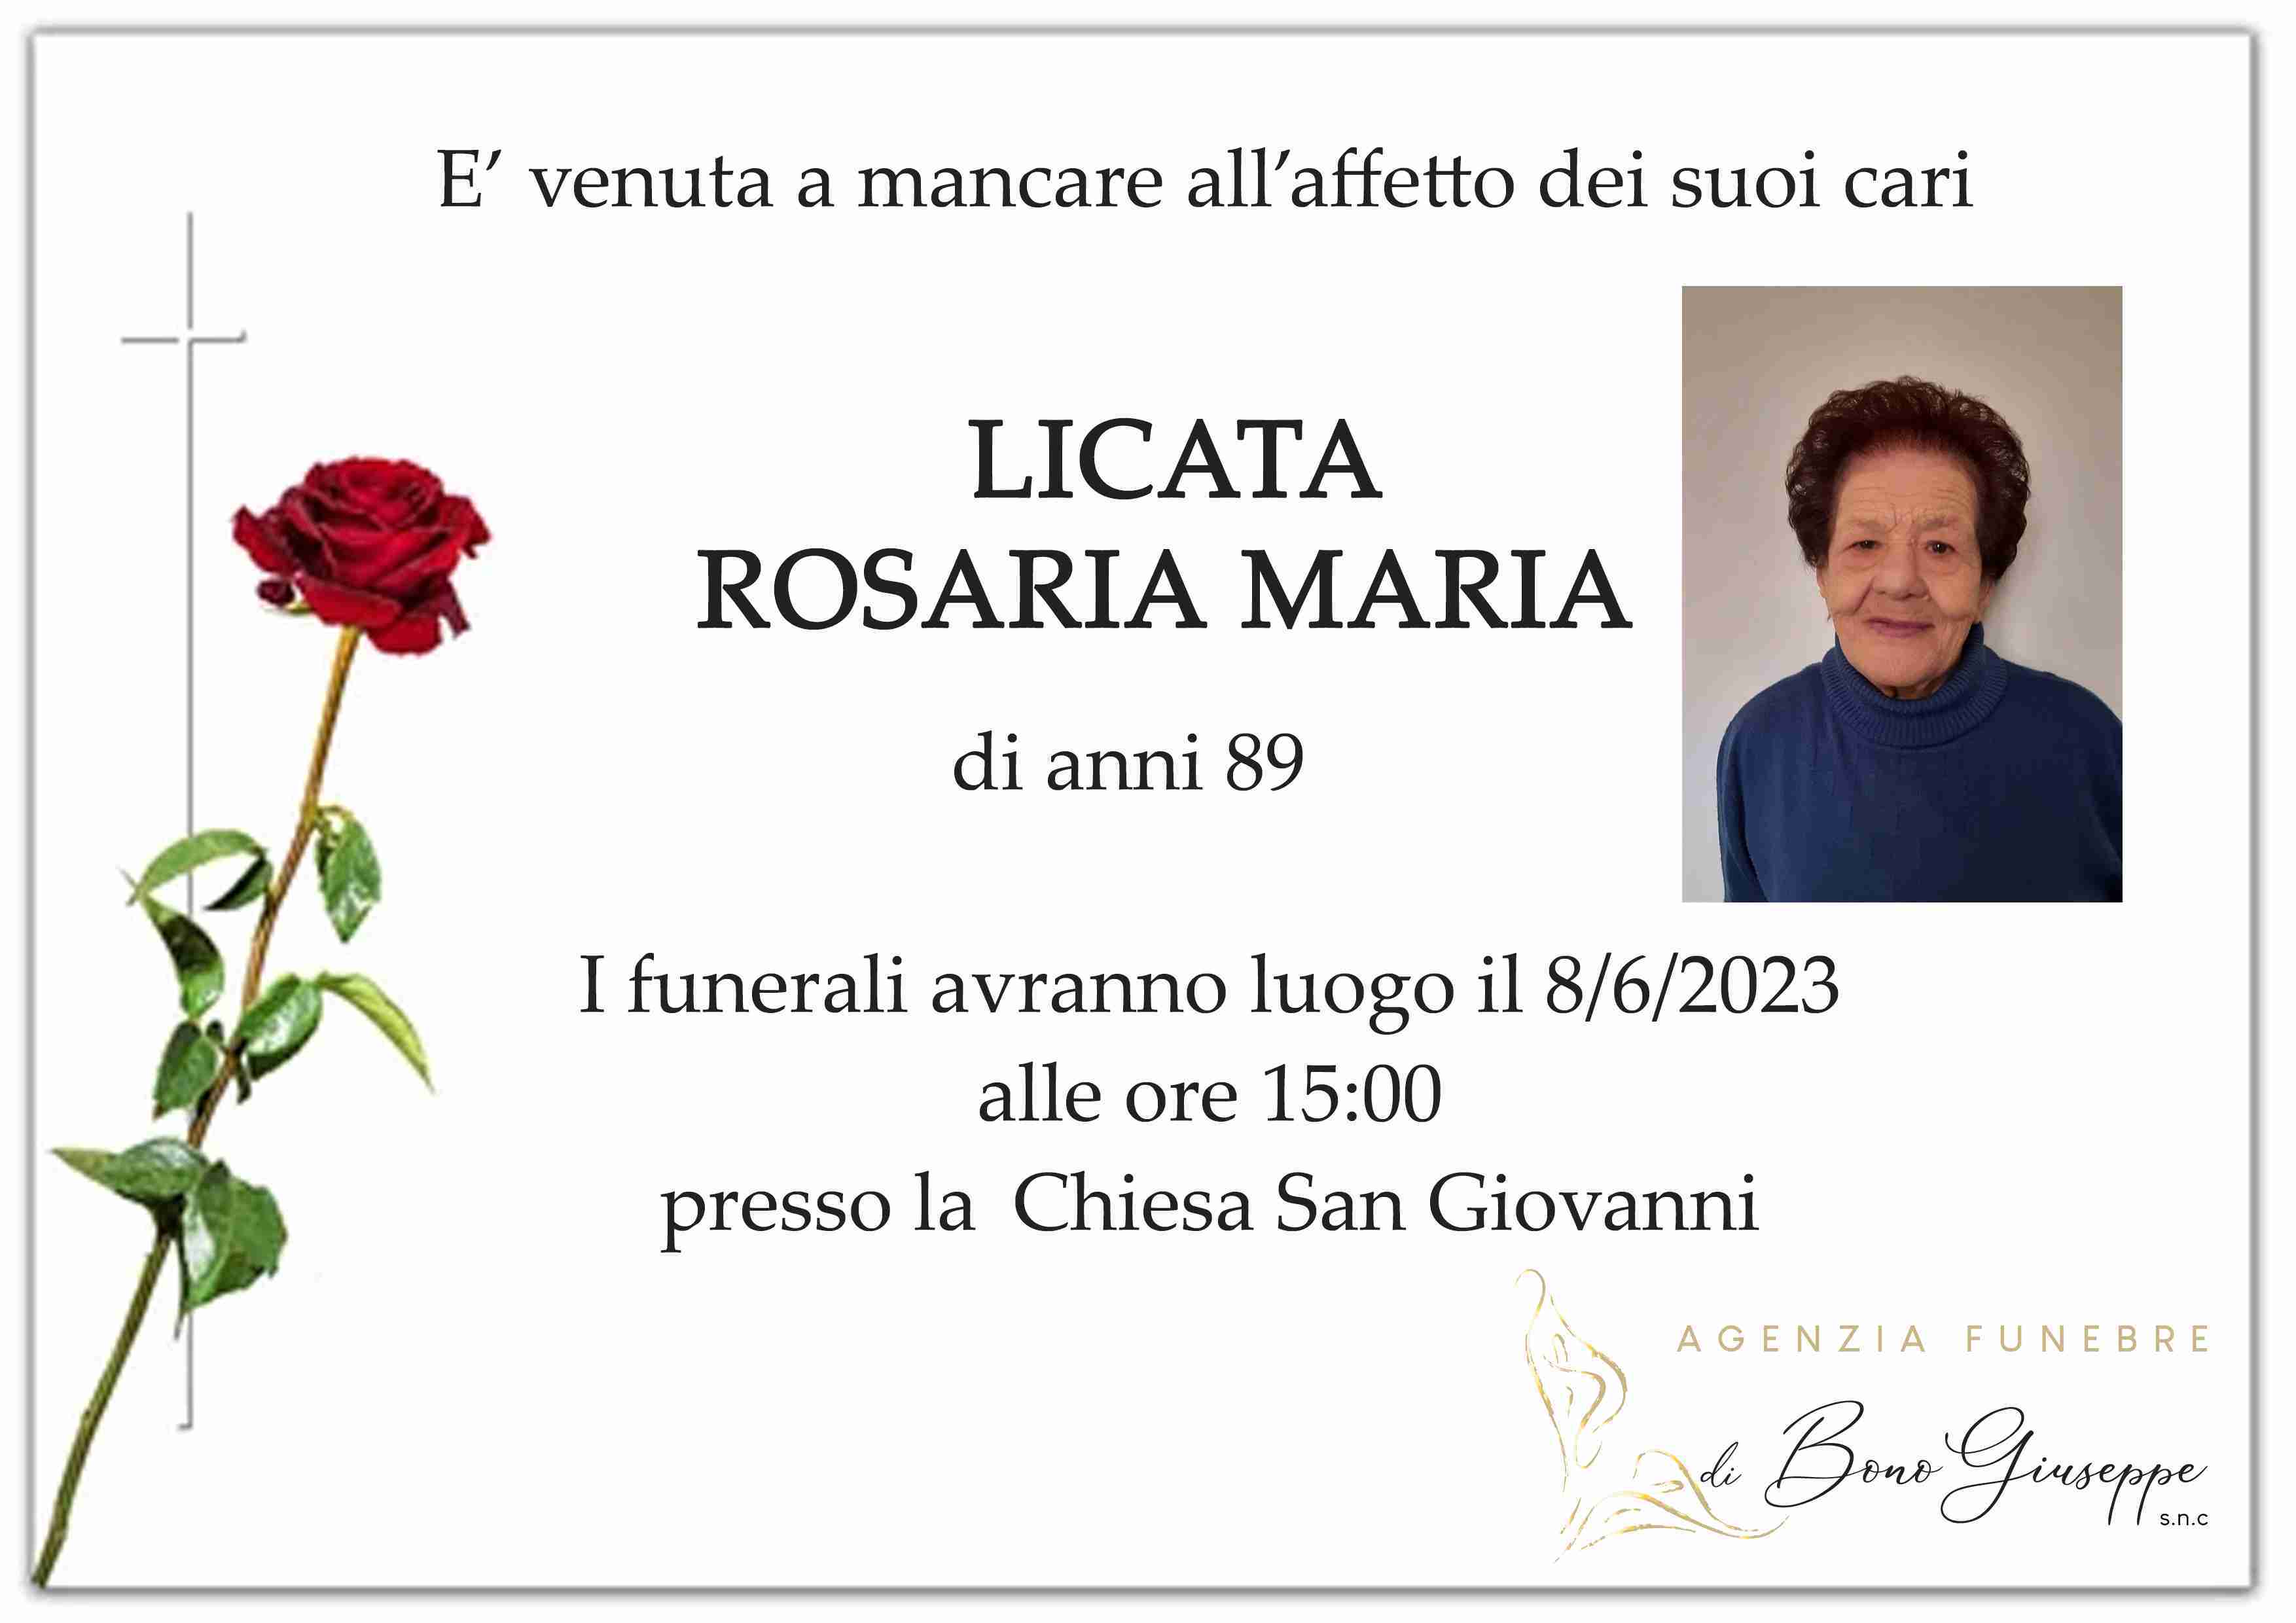 Rosaria Maria Licata